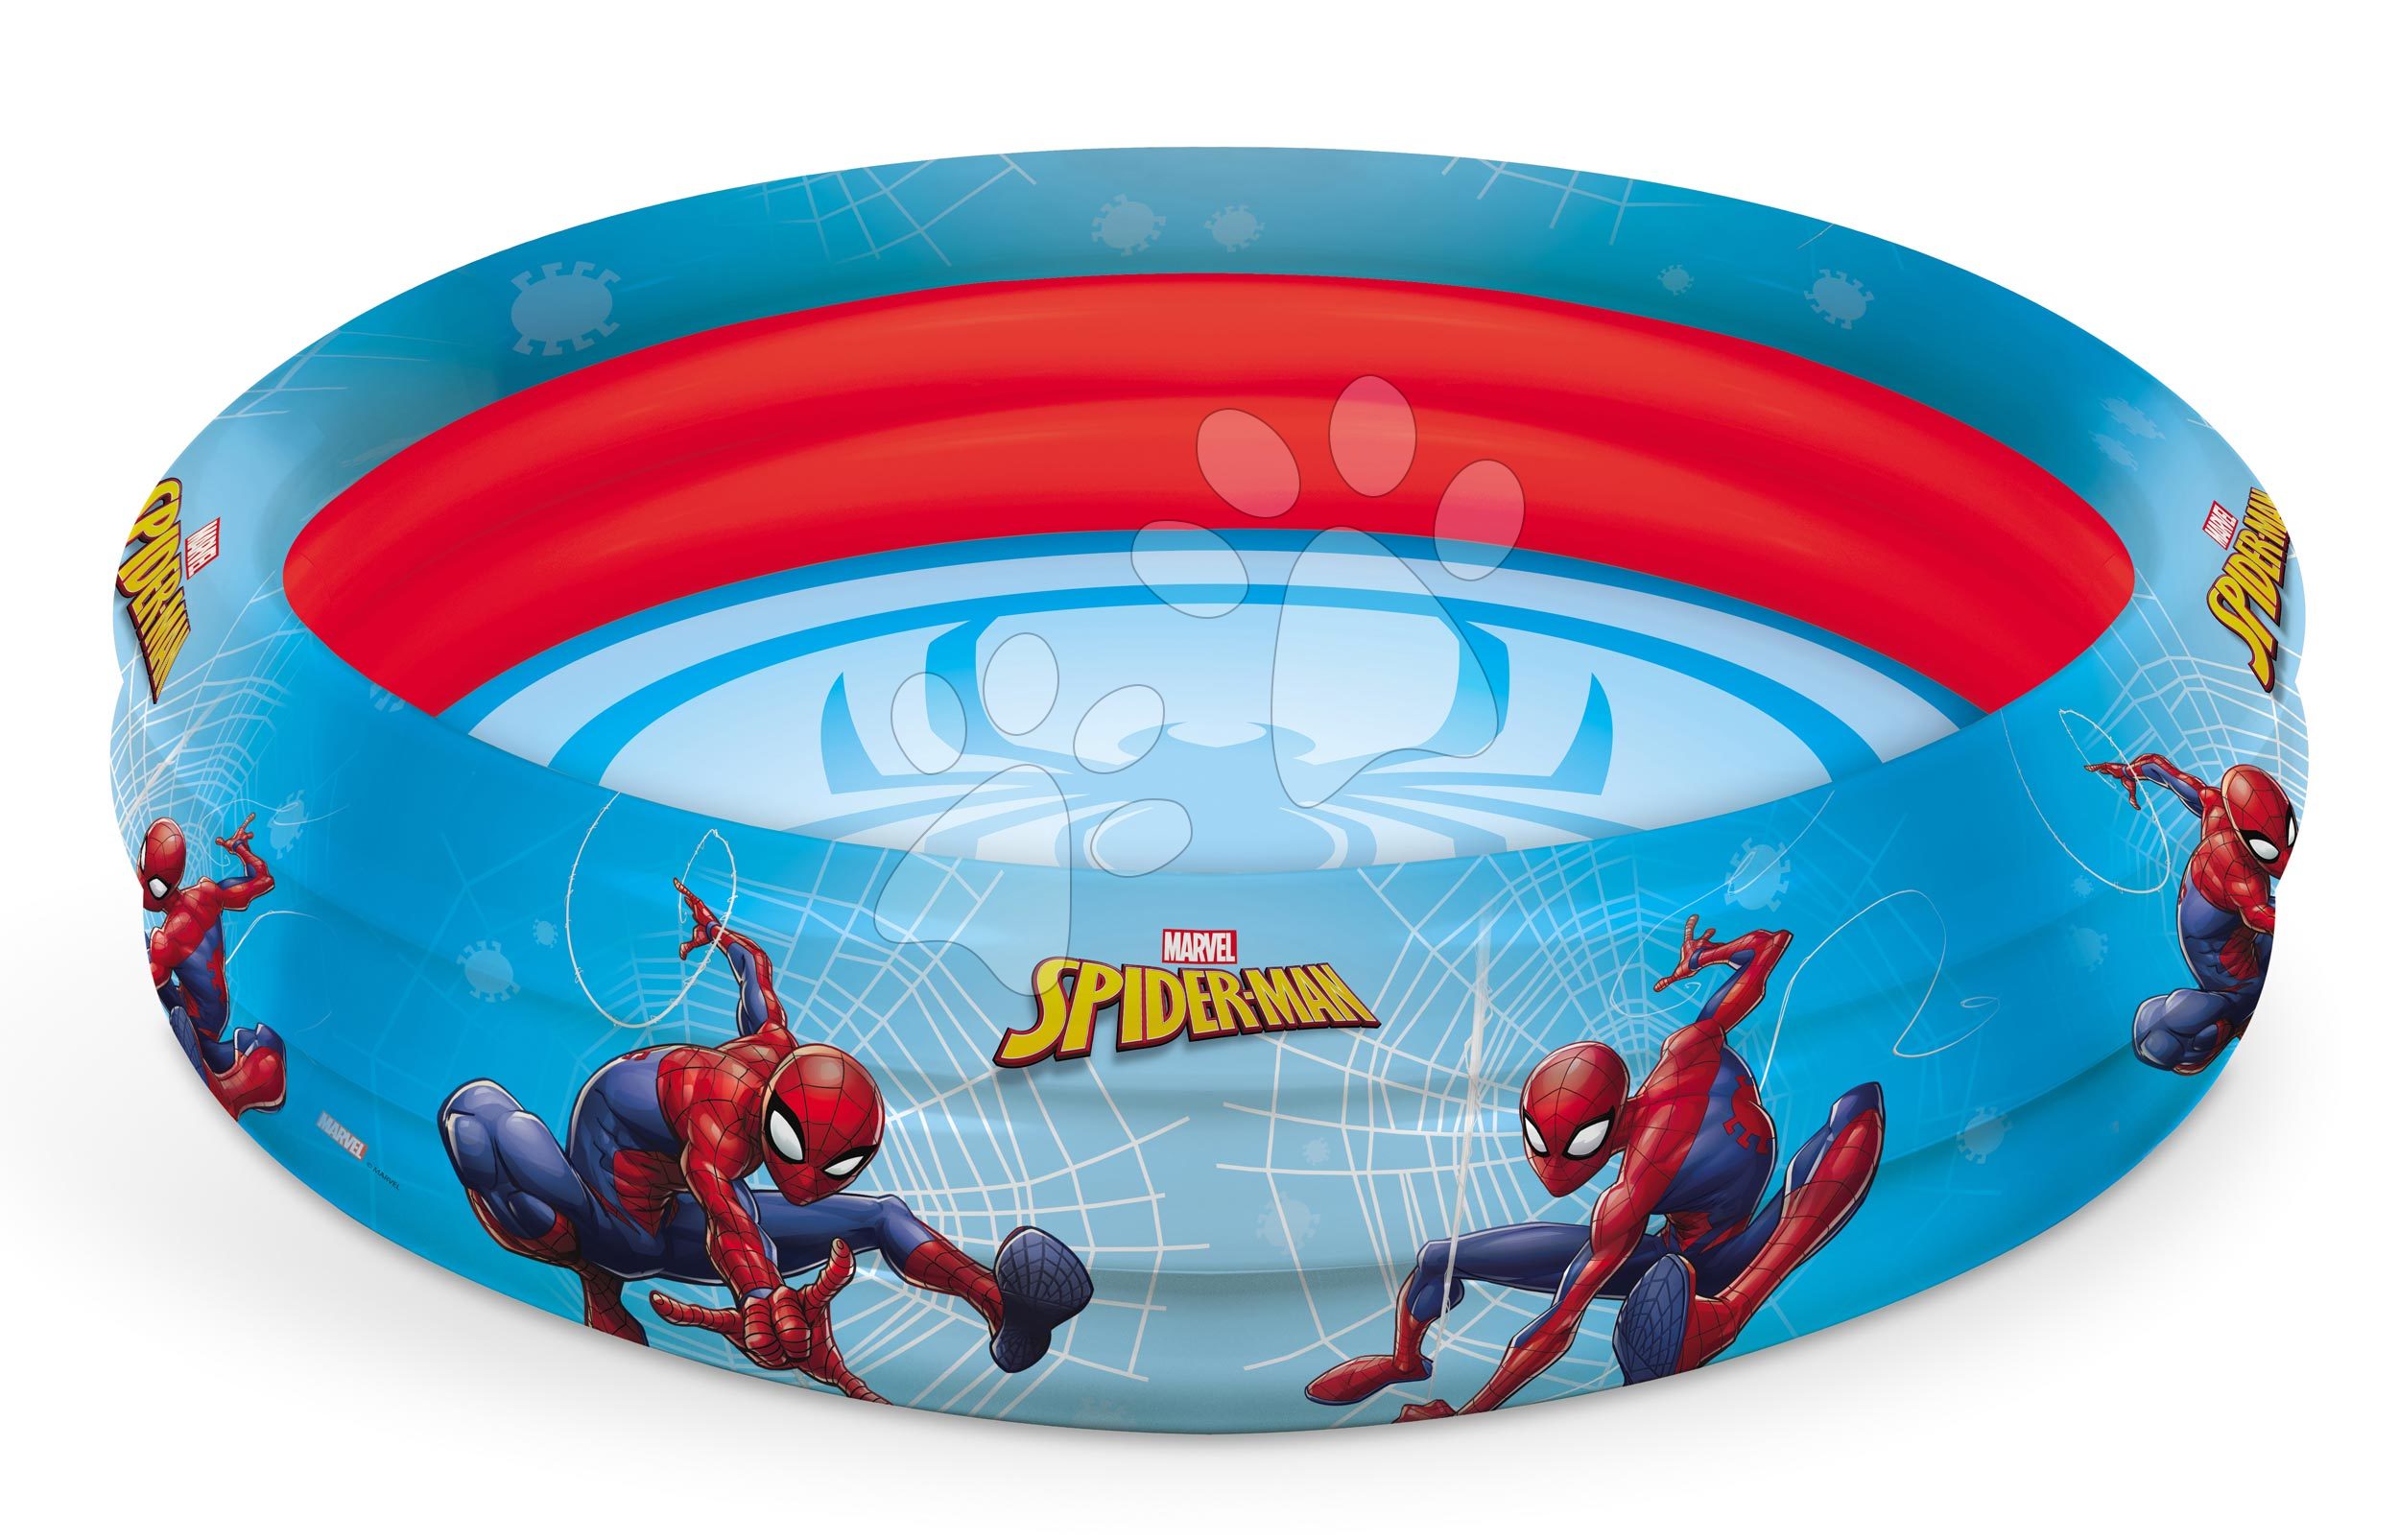 Mondo háromgyűrűs felfújható medence Spiderman 100 cm 16345 piros